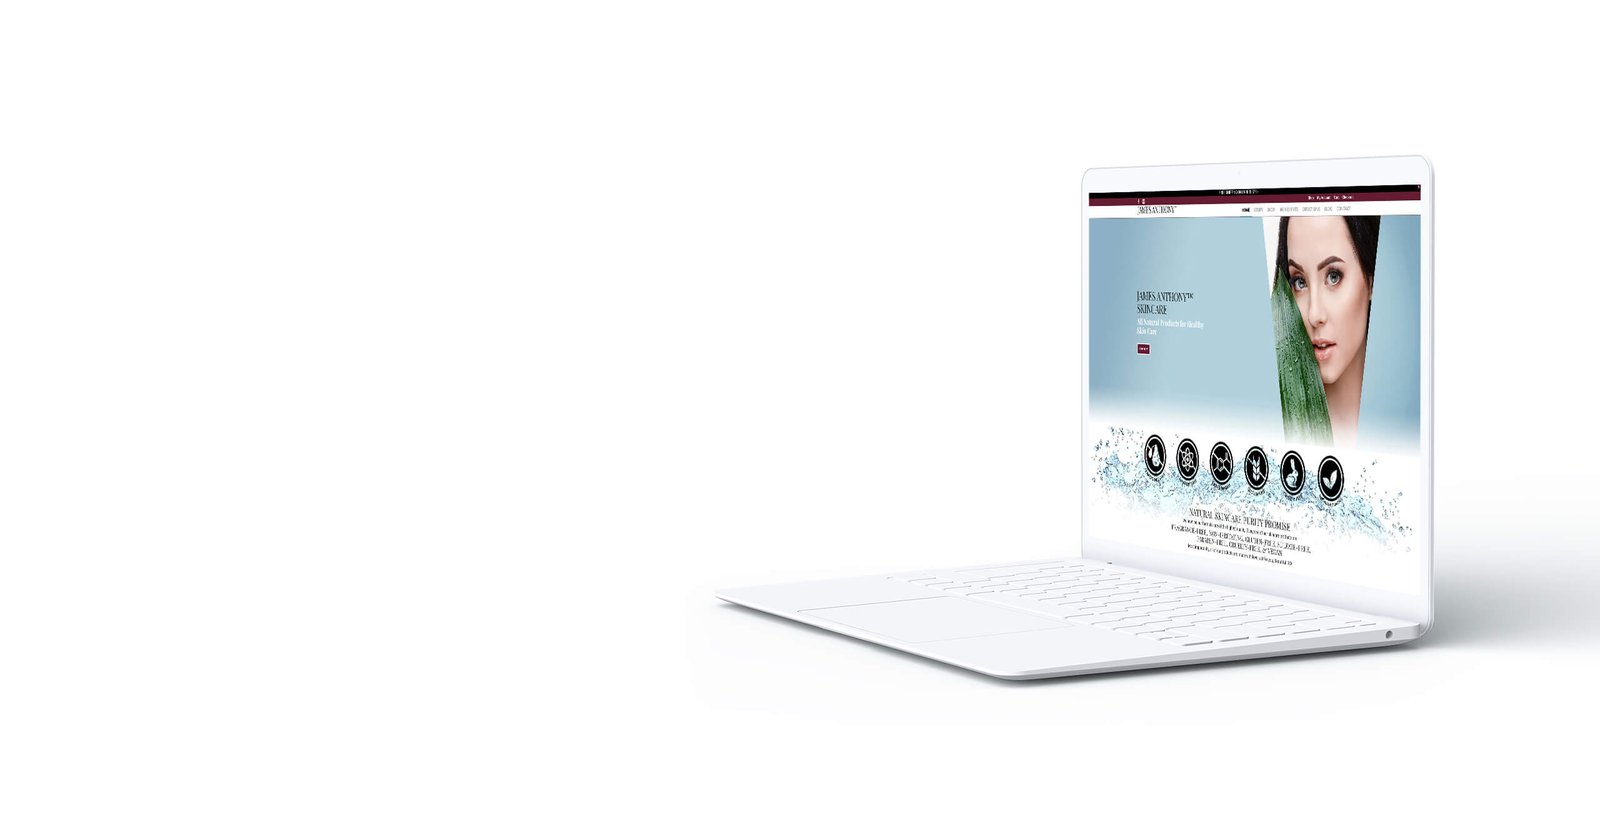 skincare website design on a laptop display